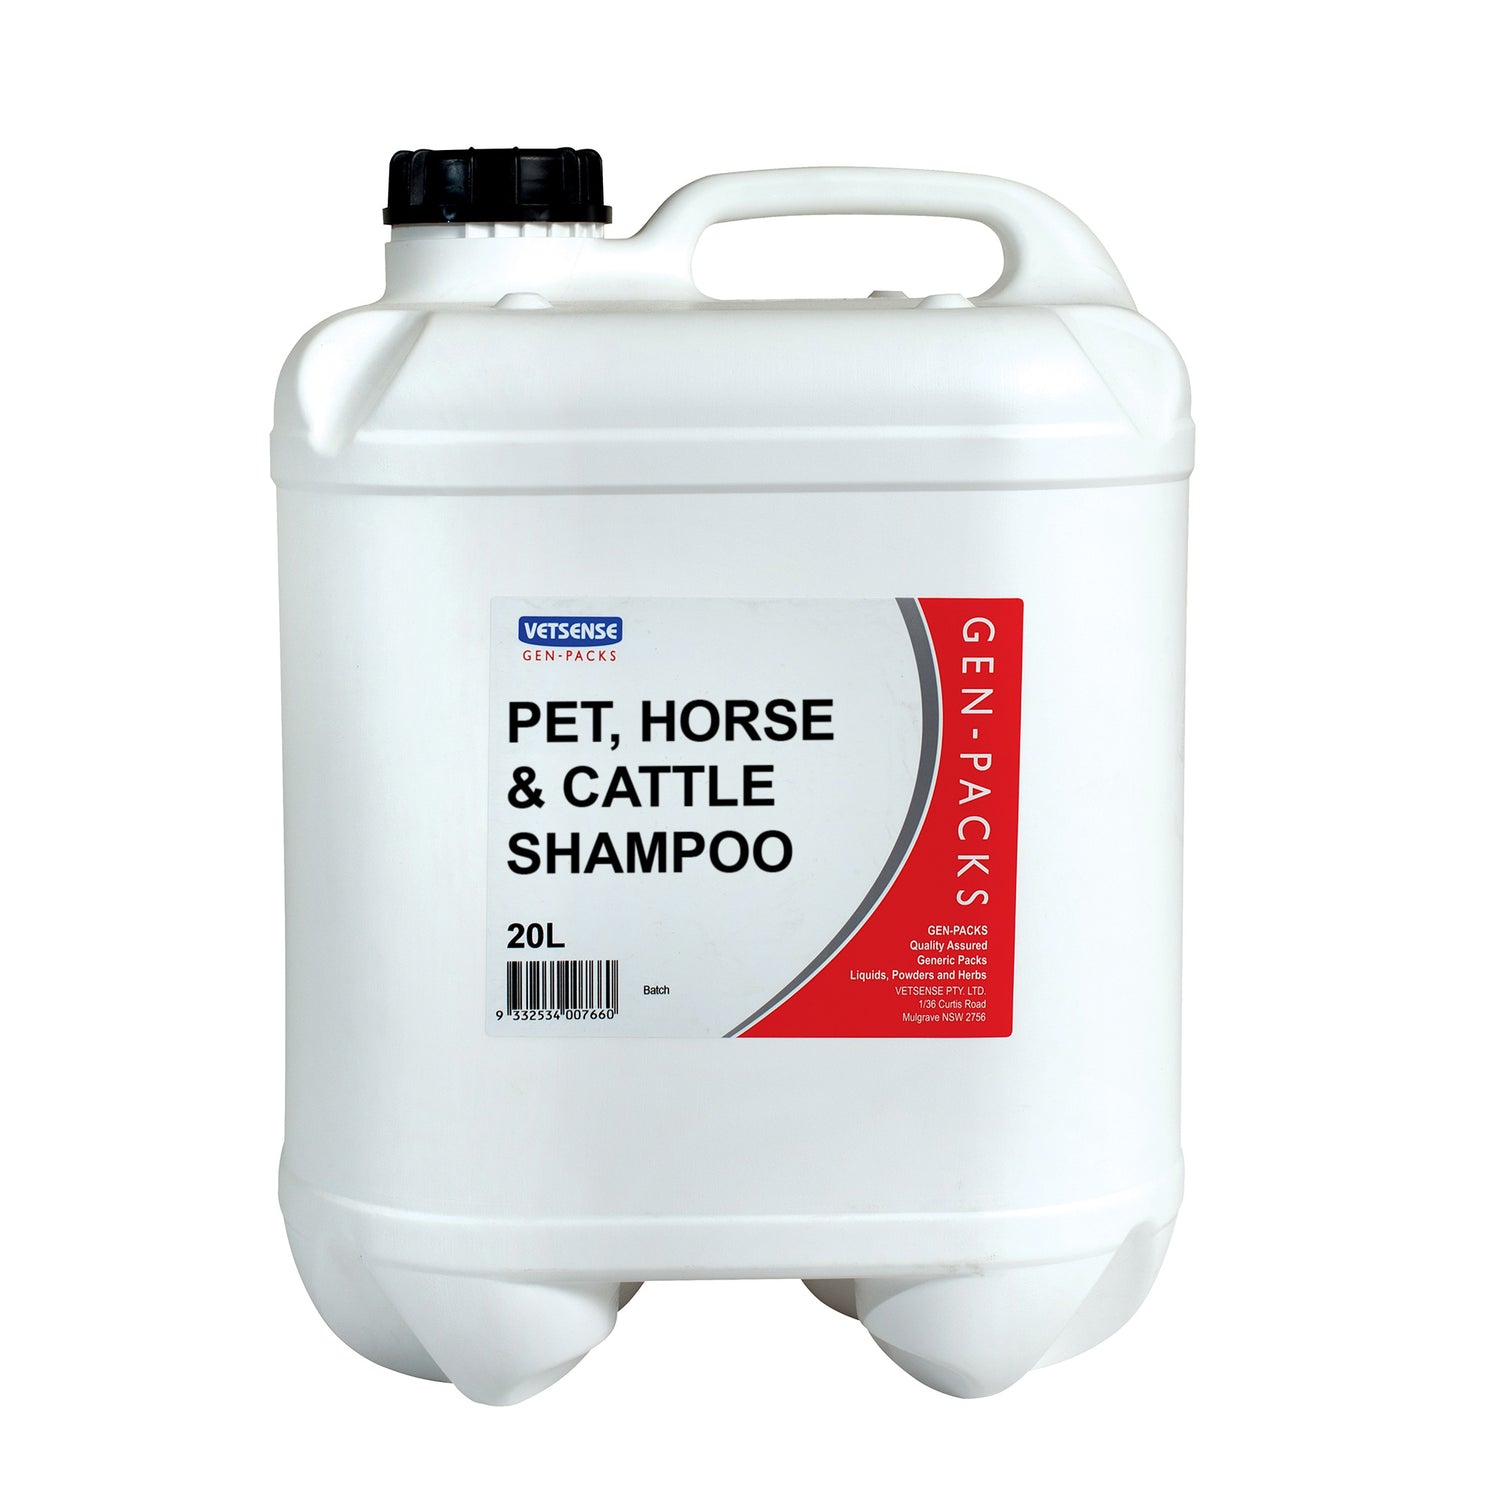 Vetsense Gen Pack Pet, Horse & Cattle Shampoo 20L